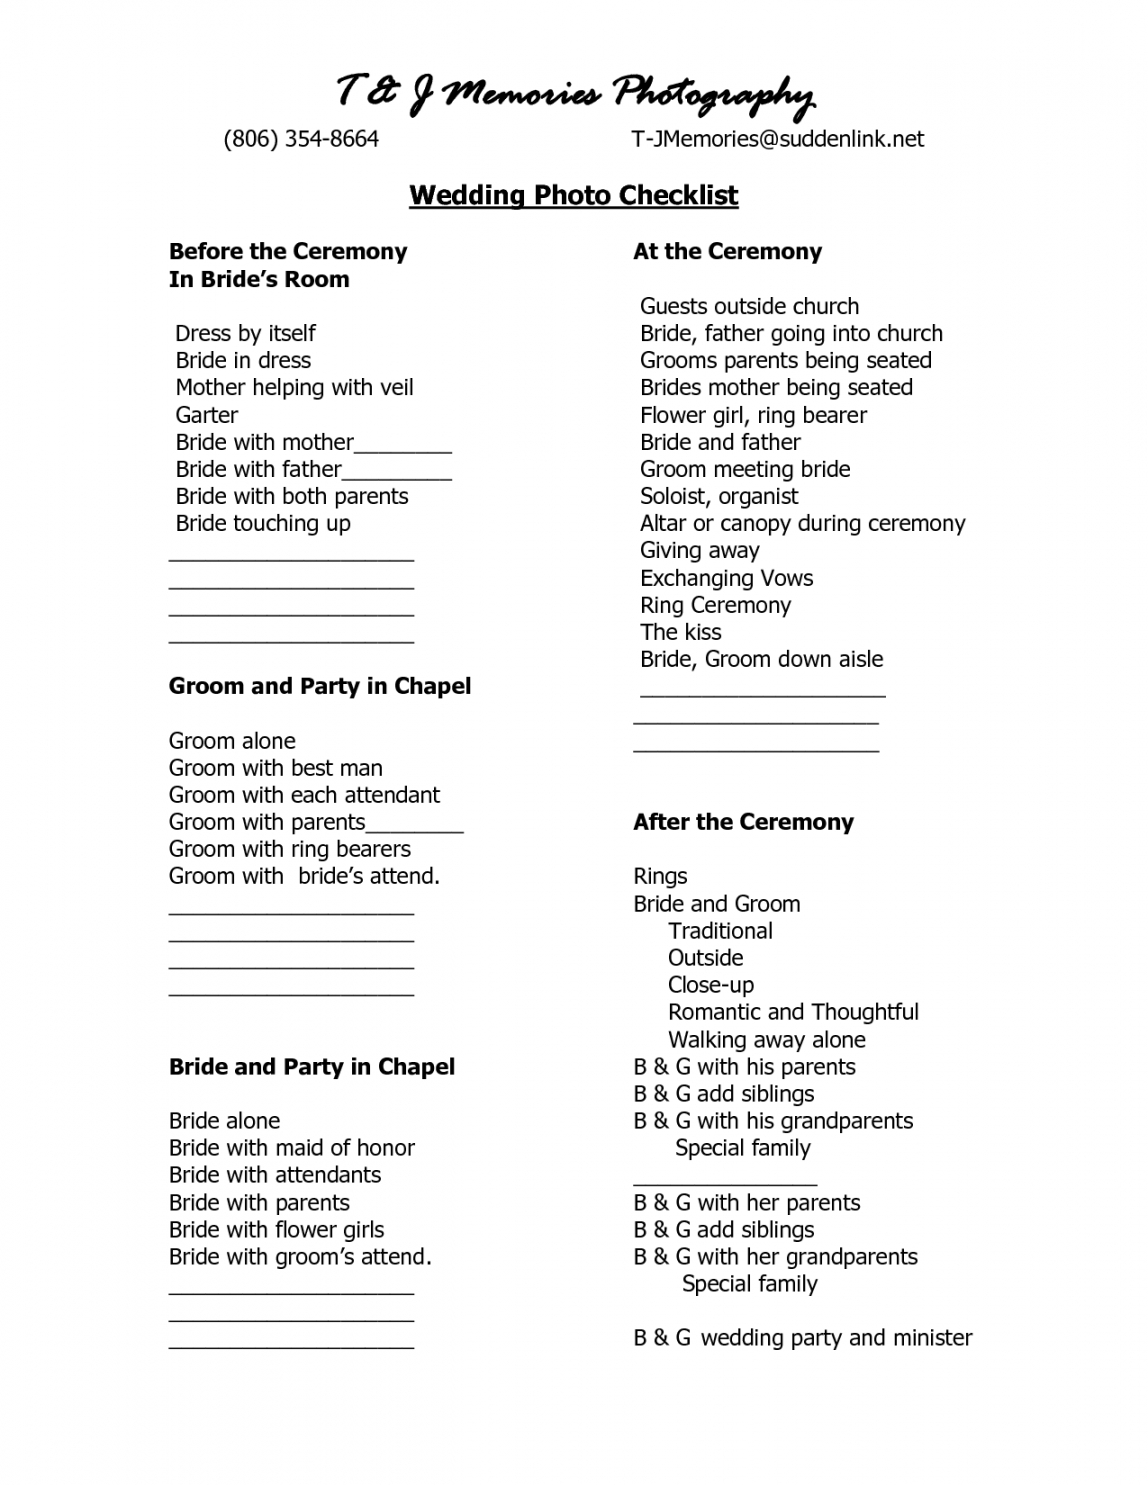 wedding photography checklist template  wedding photo checklist wedding photo checklist template pdf